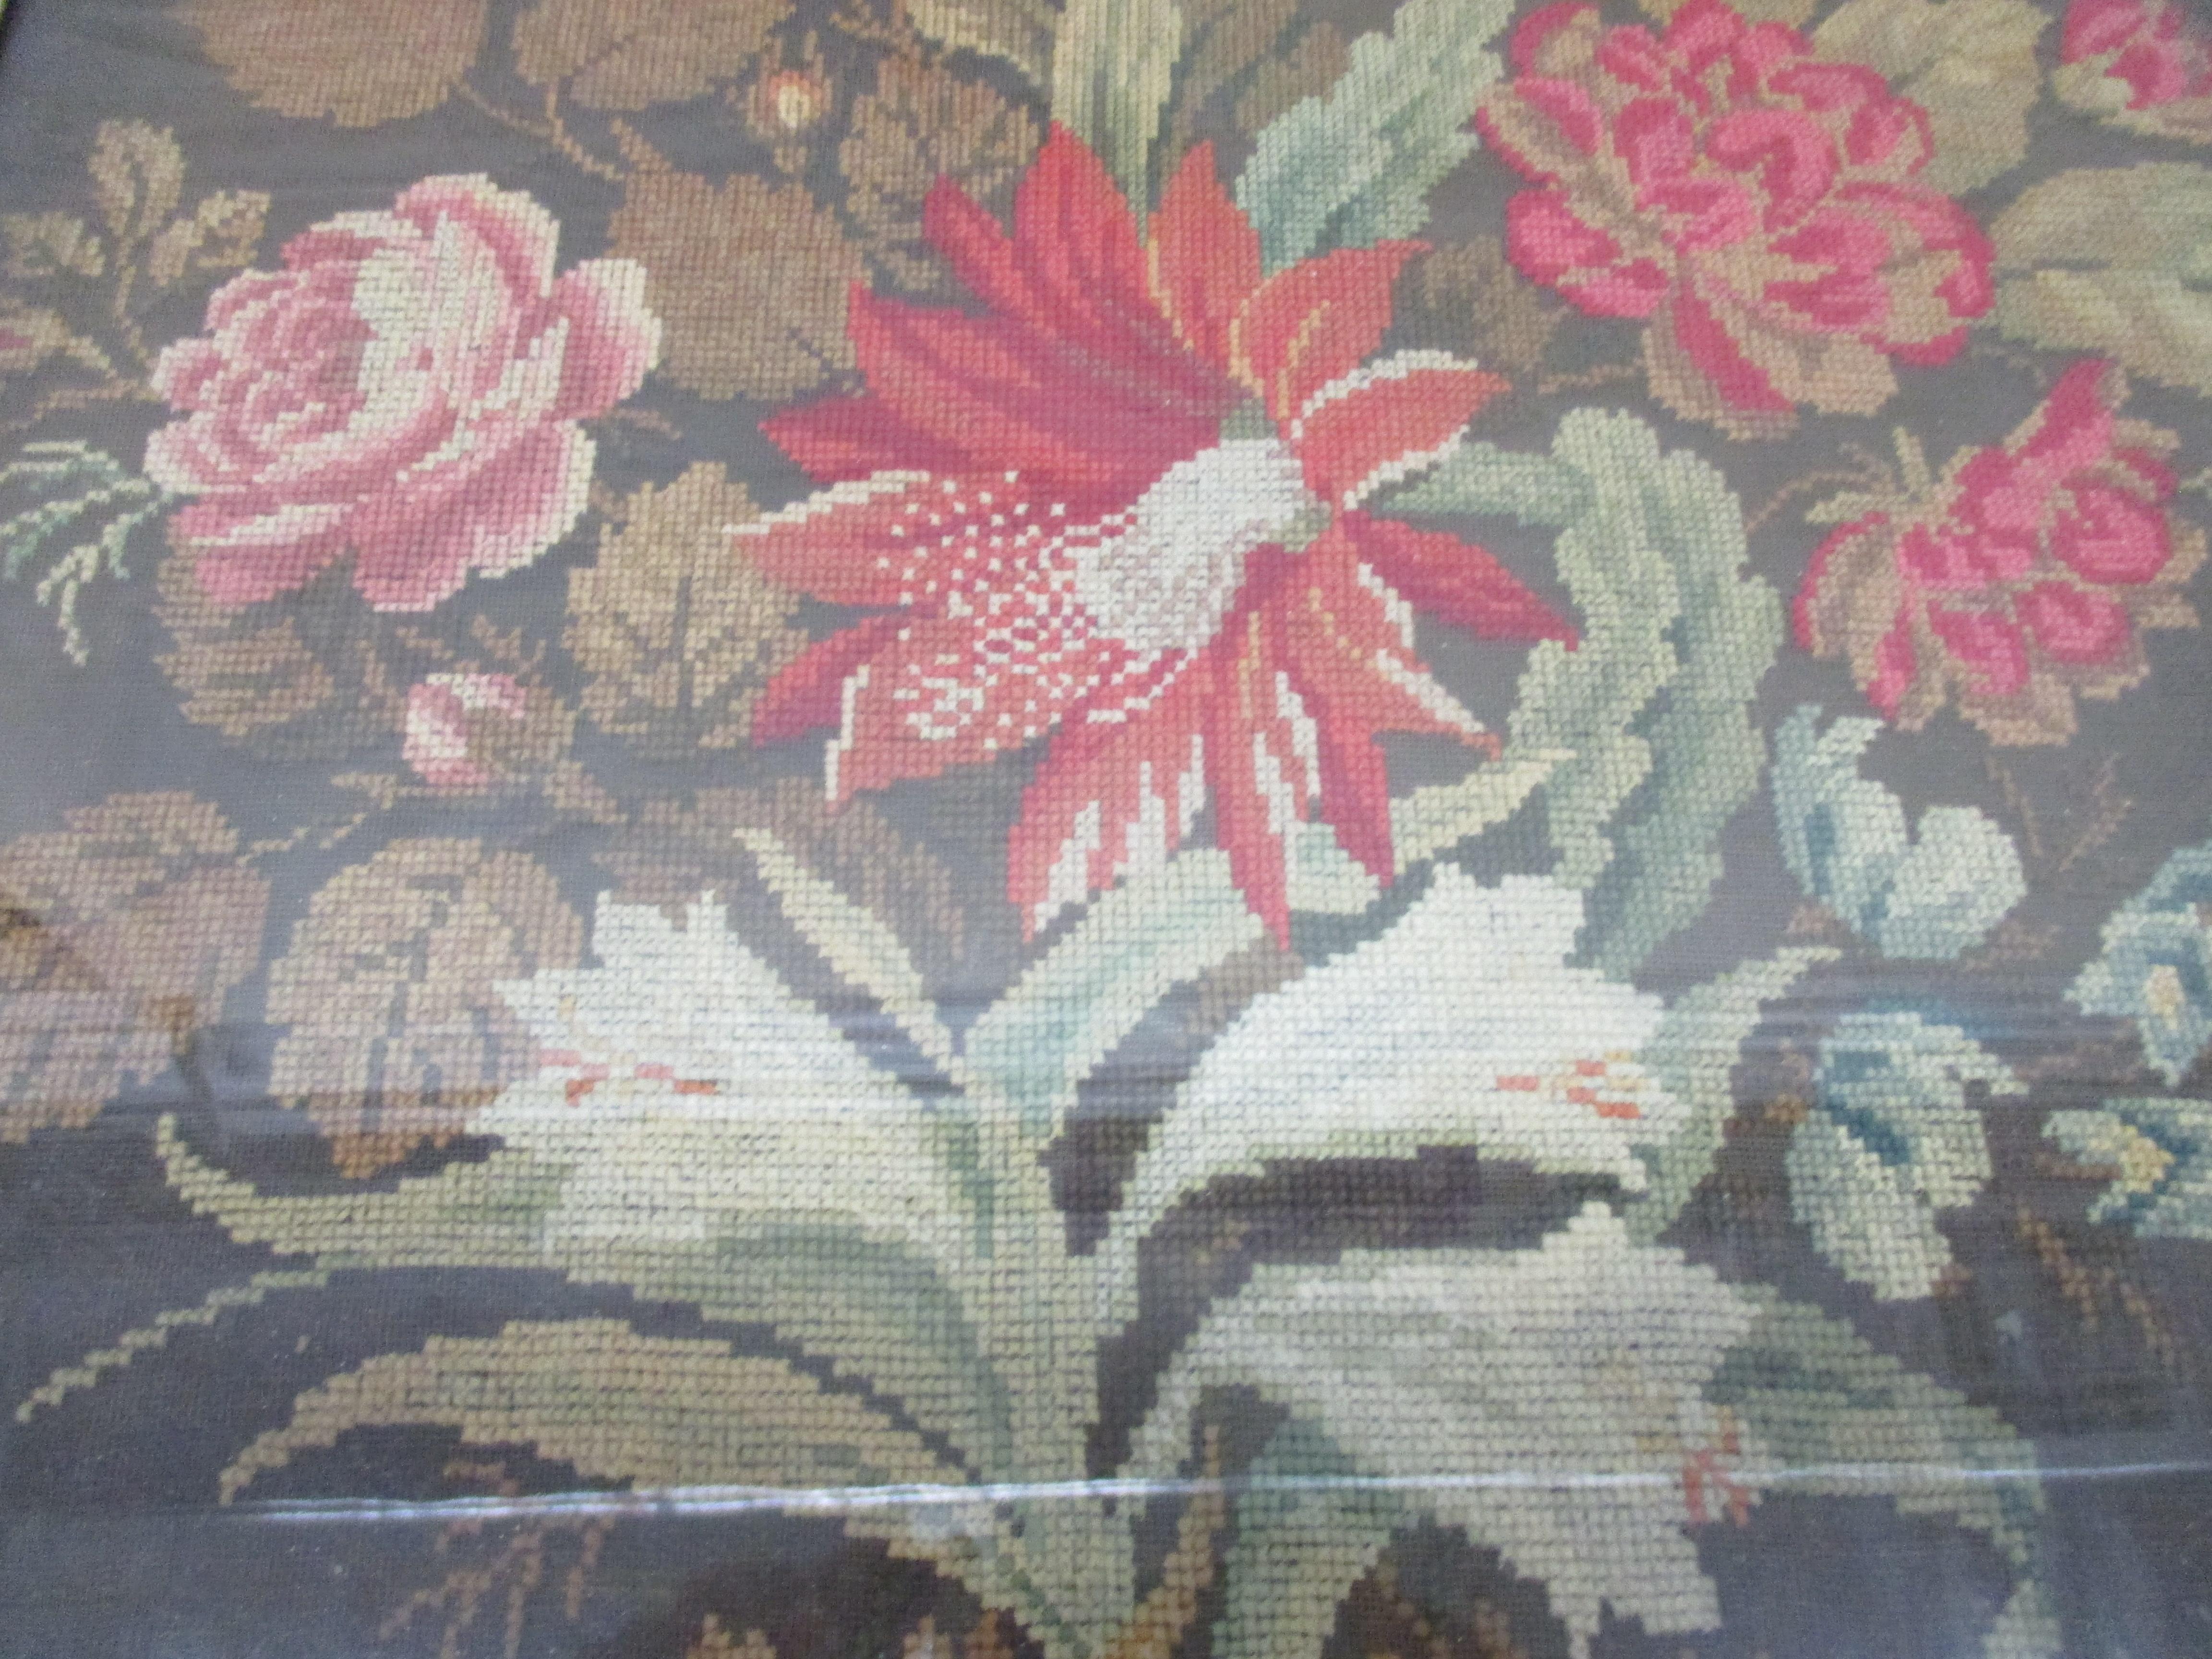 Antique framed English needlework Tapestry panel 
Size: 20